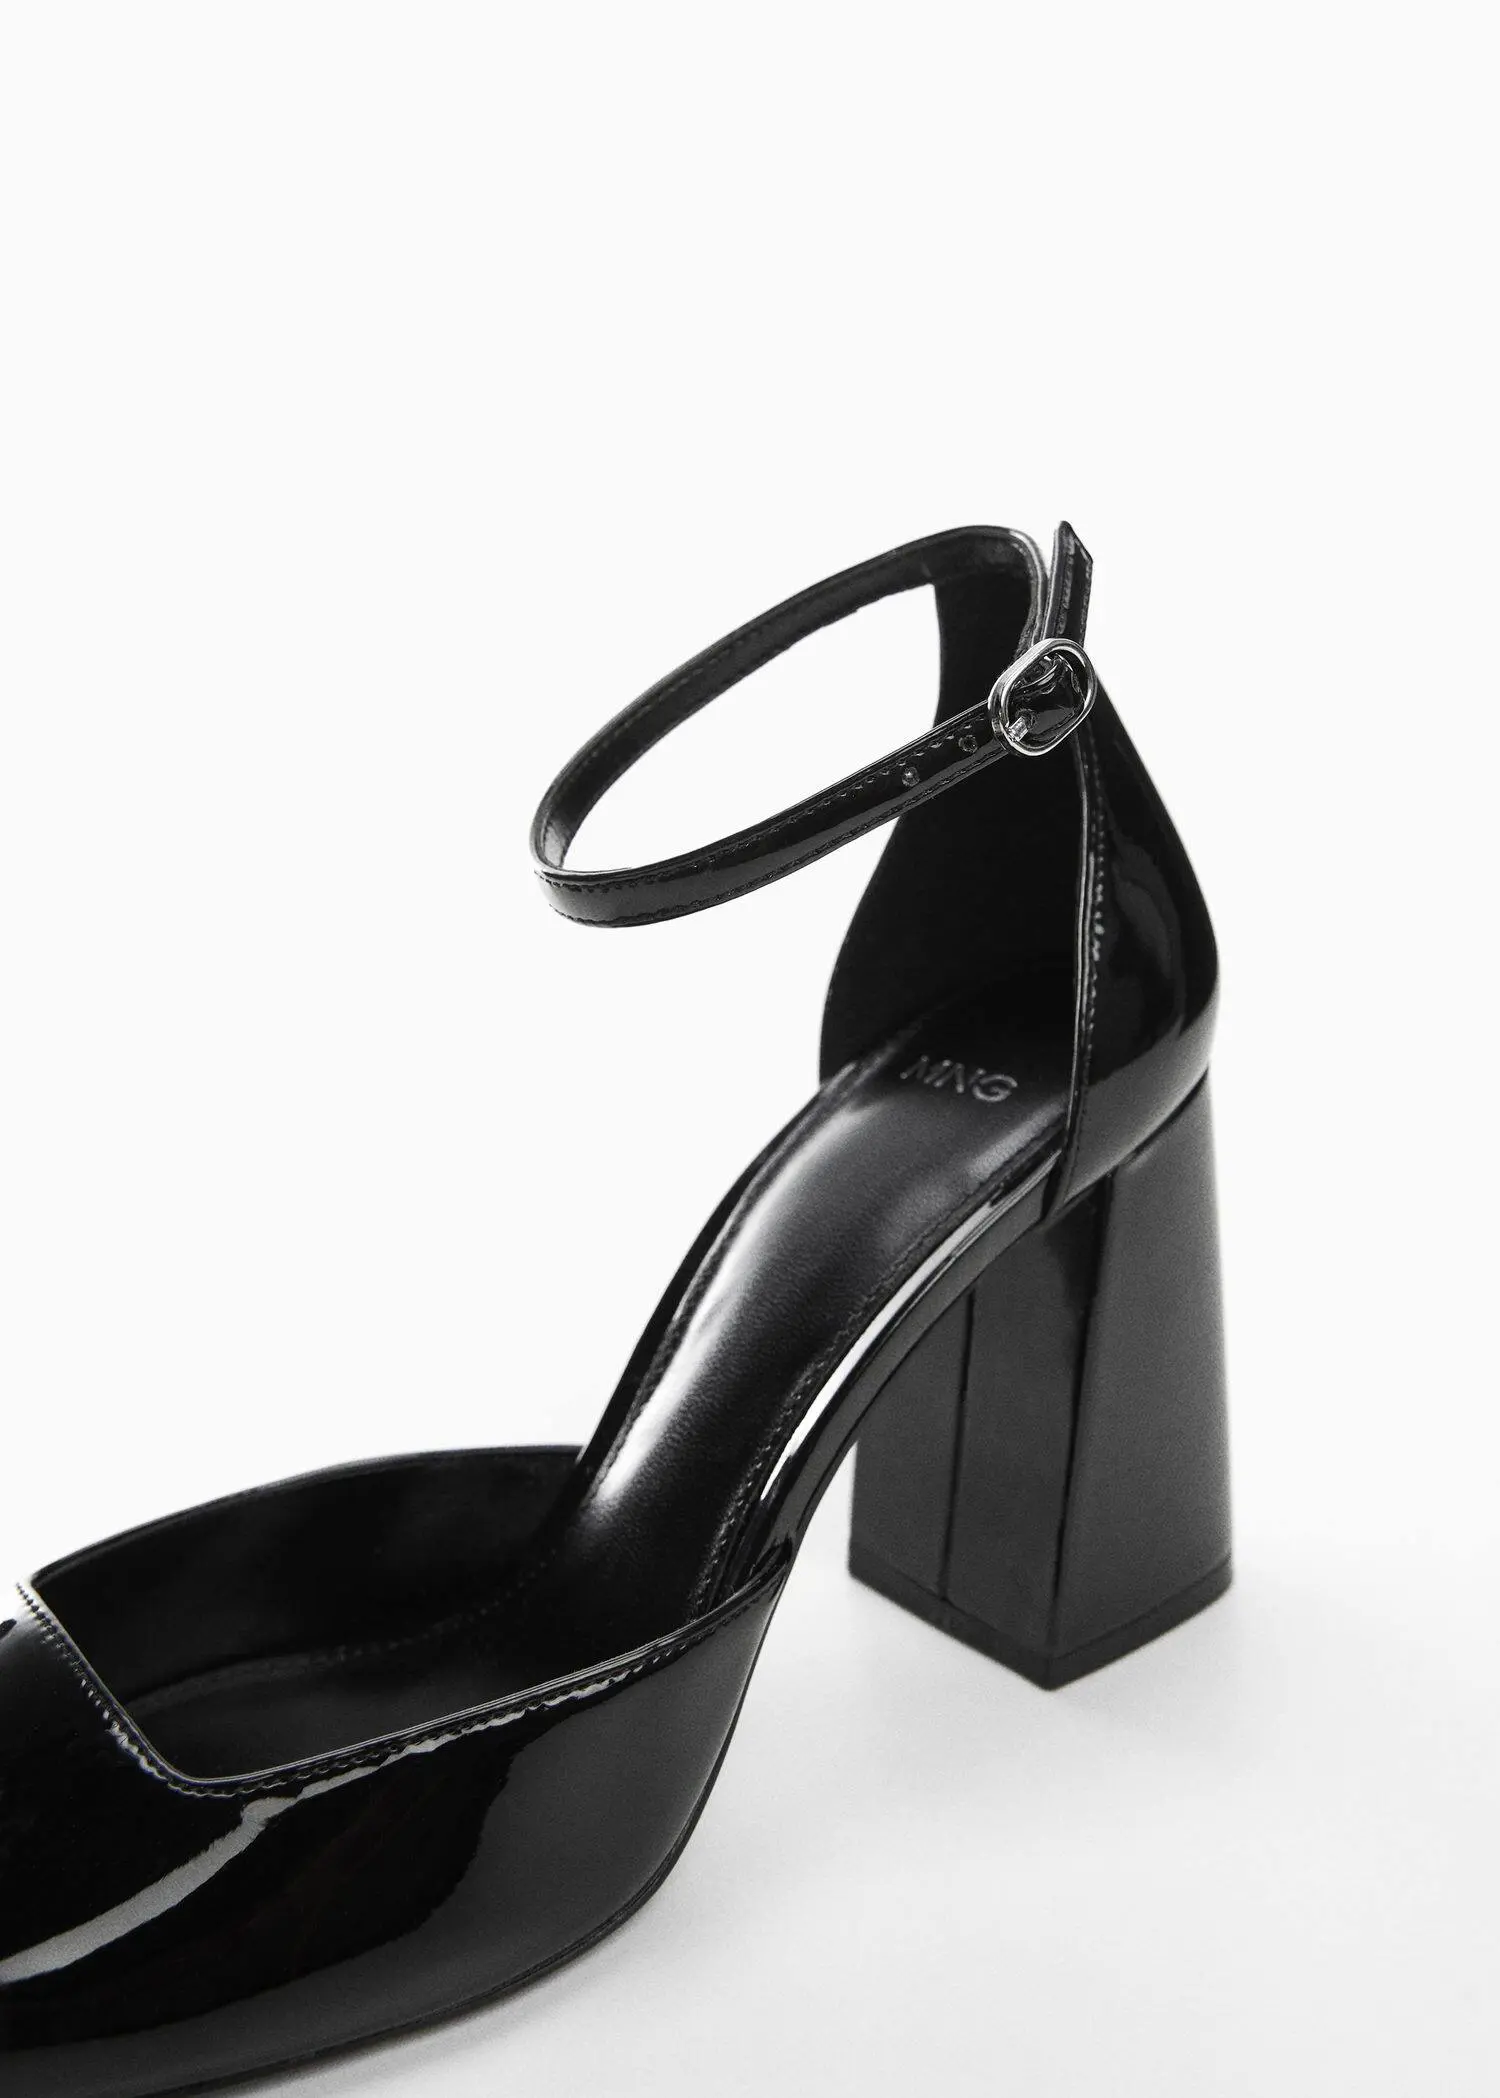 Mango Patent leather heel shoes. 3